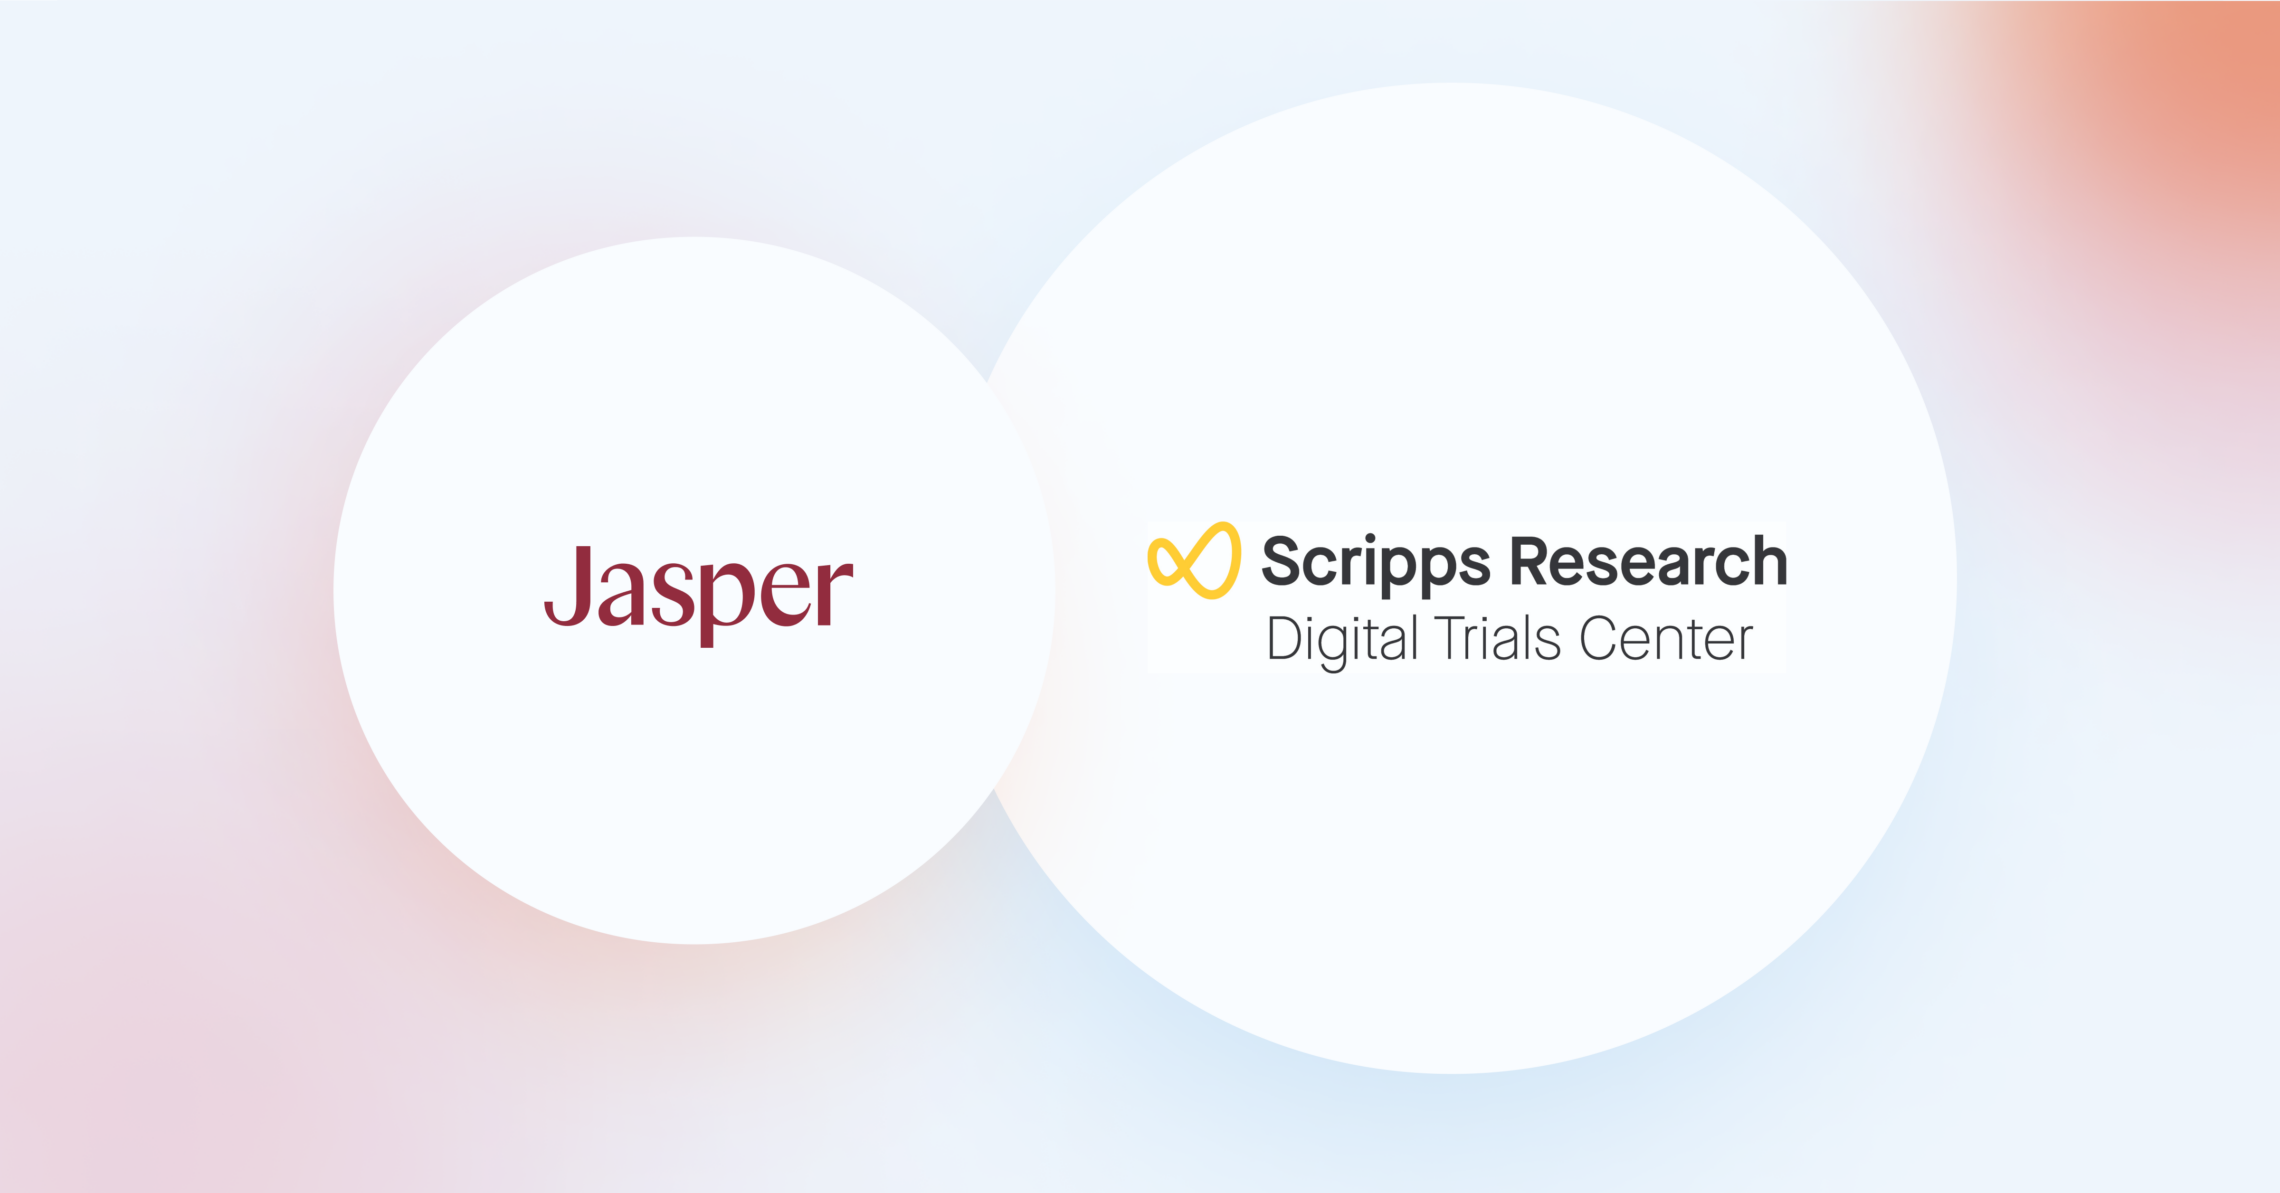 Jasper logo and Scripps Research logo with Digital Trials Center subtext